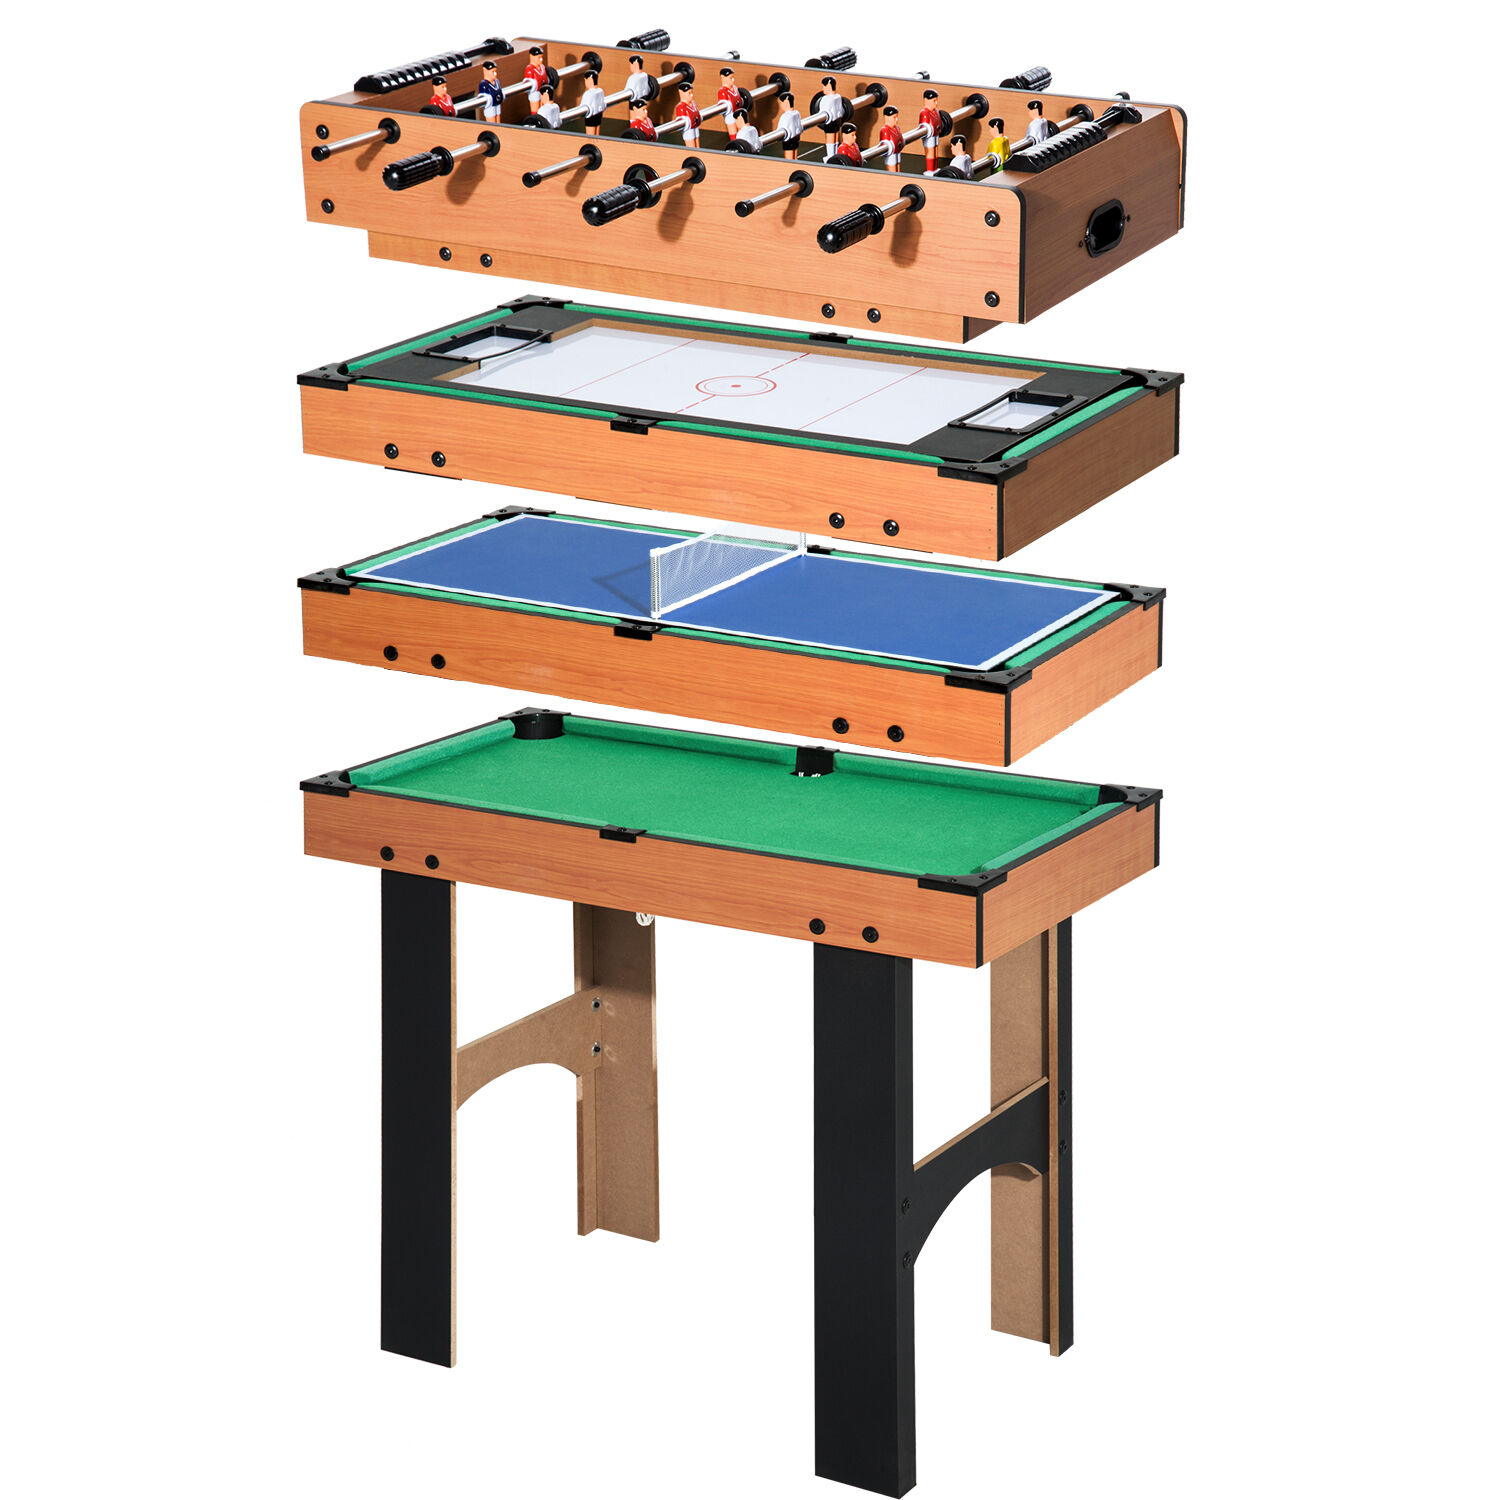 Homcom Table multi jeux 4 en 1 babyfoot billard air hockey ping-pong avec accessoires MDF bois 87 x 43 x 73 cm aosom france